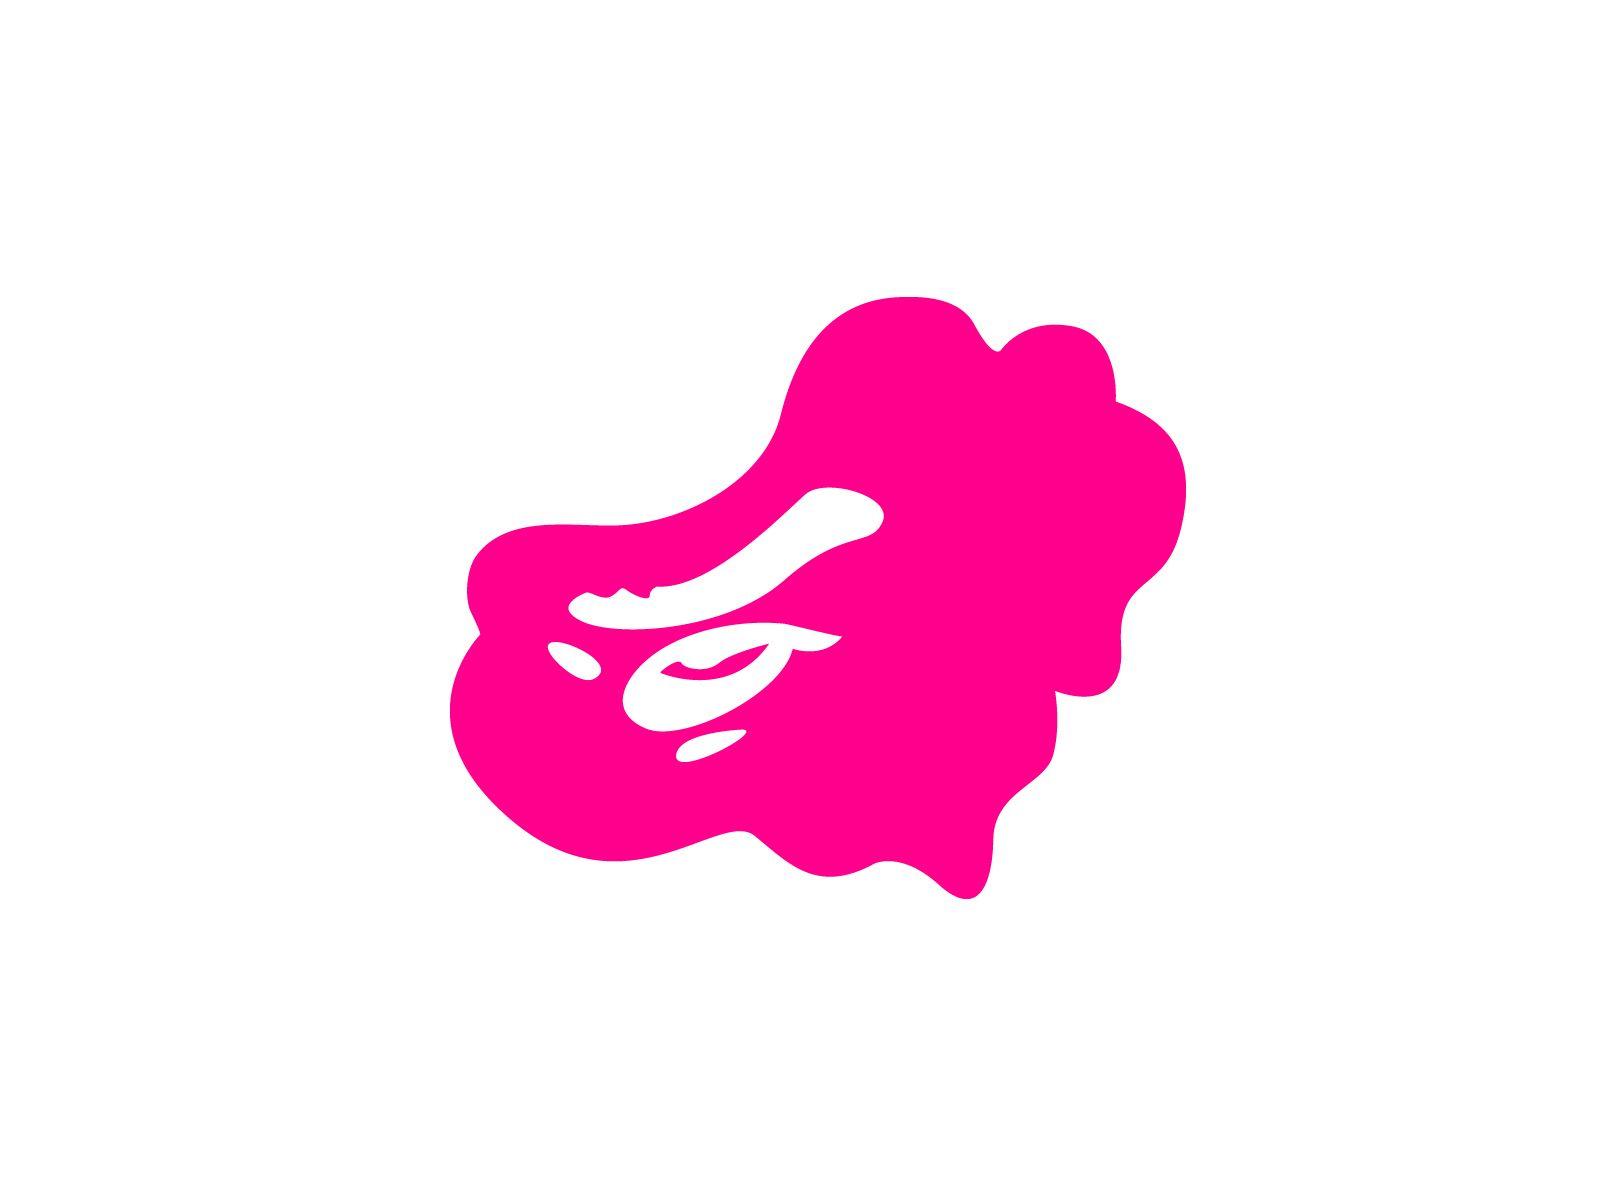 BAPE Gorilla Logo - bape desktop wallpaper Group with 62 items